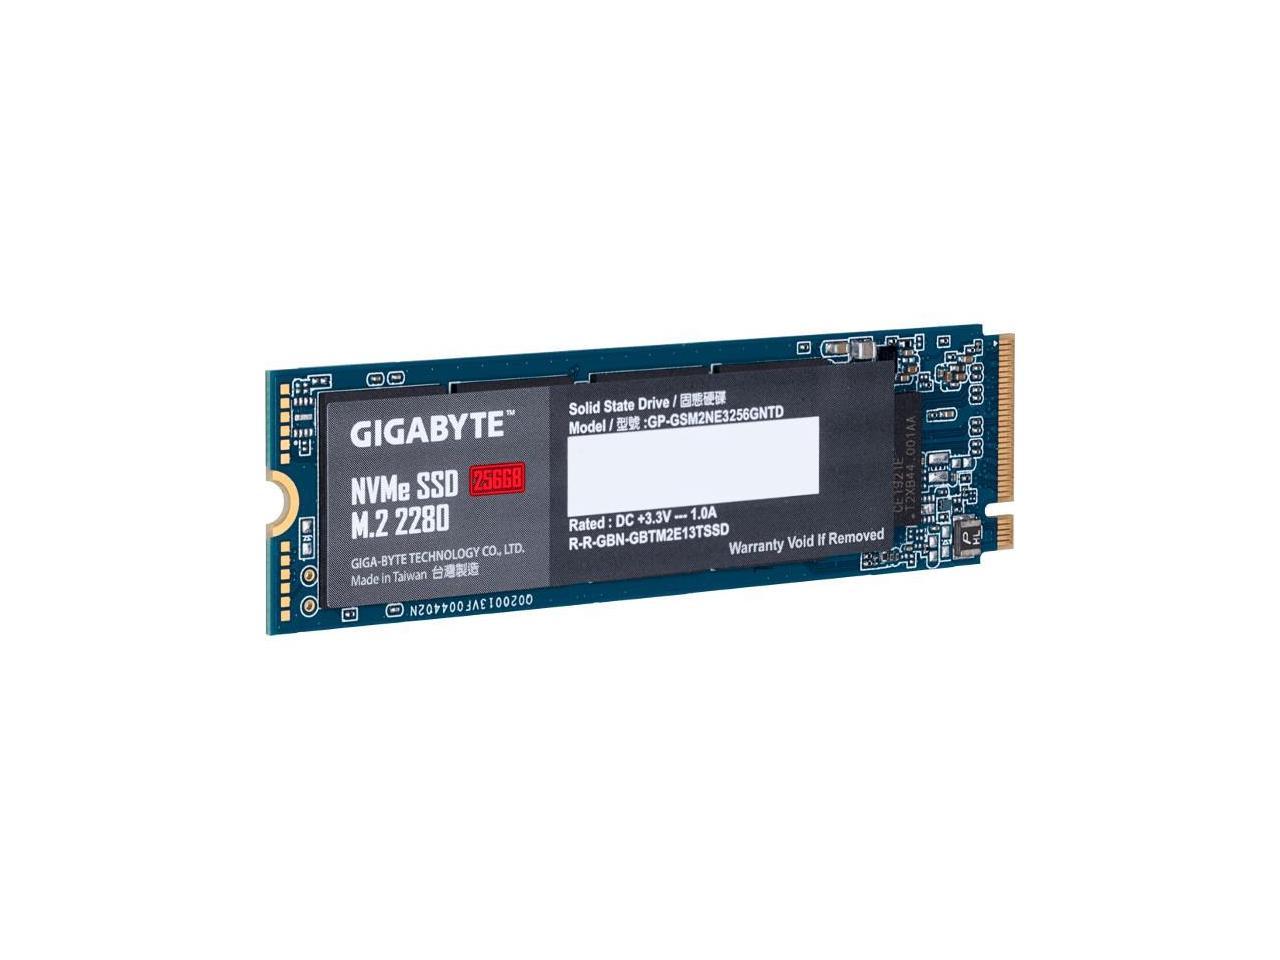 Gigabyte Gp-Gsm2Ne3256Gntd 256Gb Solid State Drive - M.2 2280 Internal - Pci Express Nvme (Pci